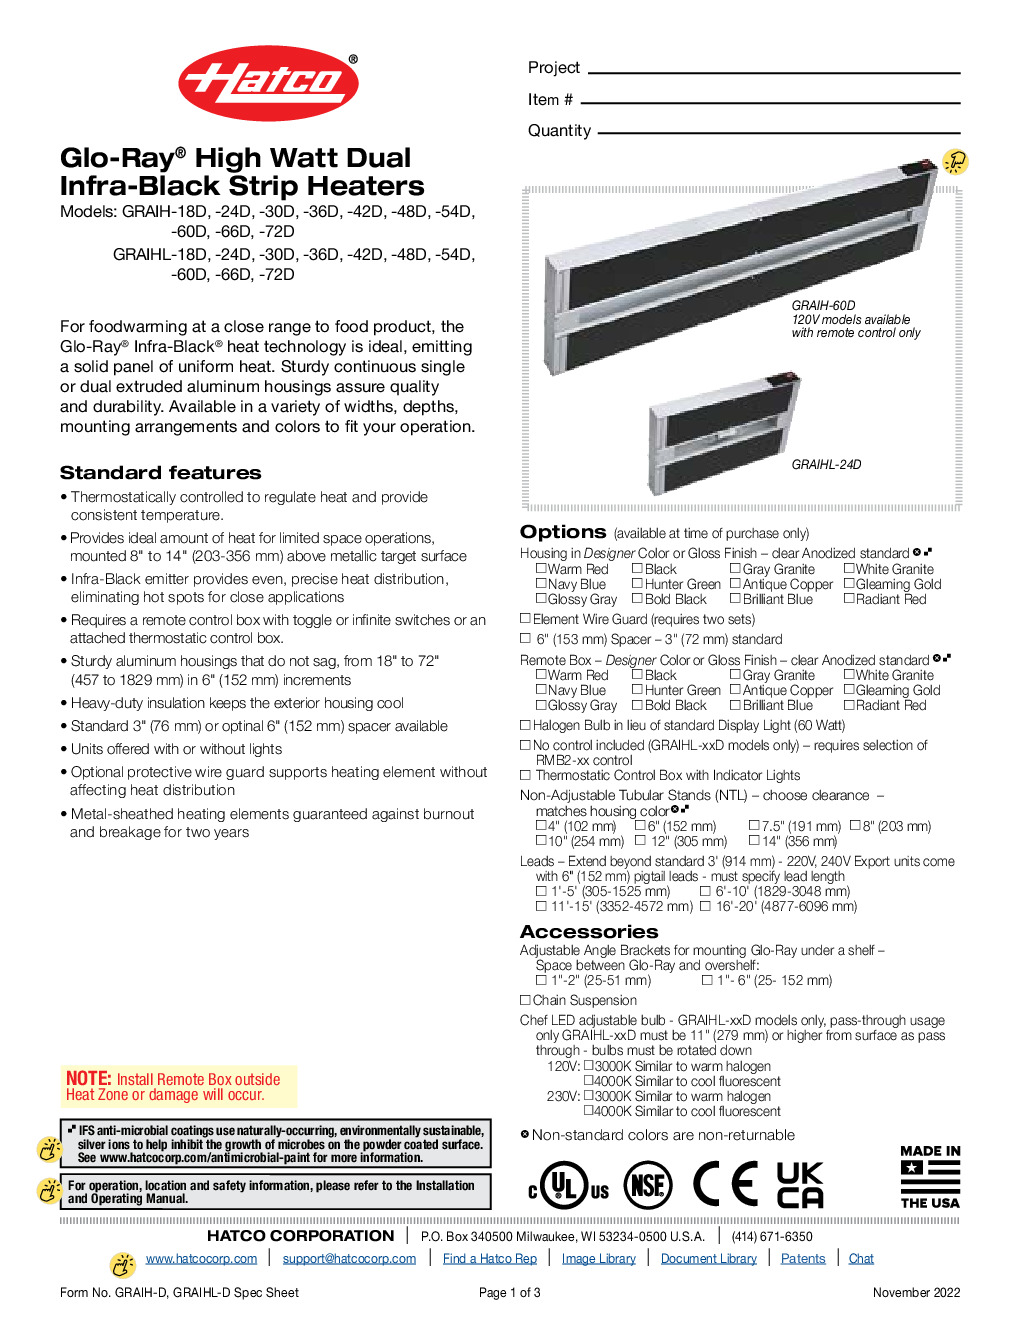 Hatco GRAIHL-72D3 Strip Type Heat Lamp